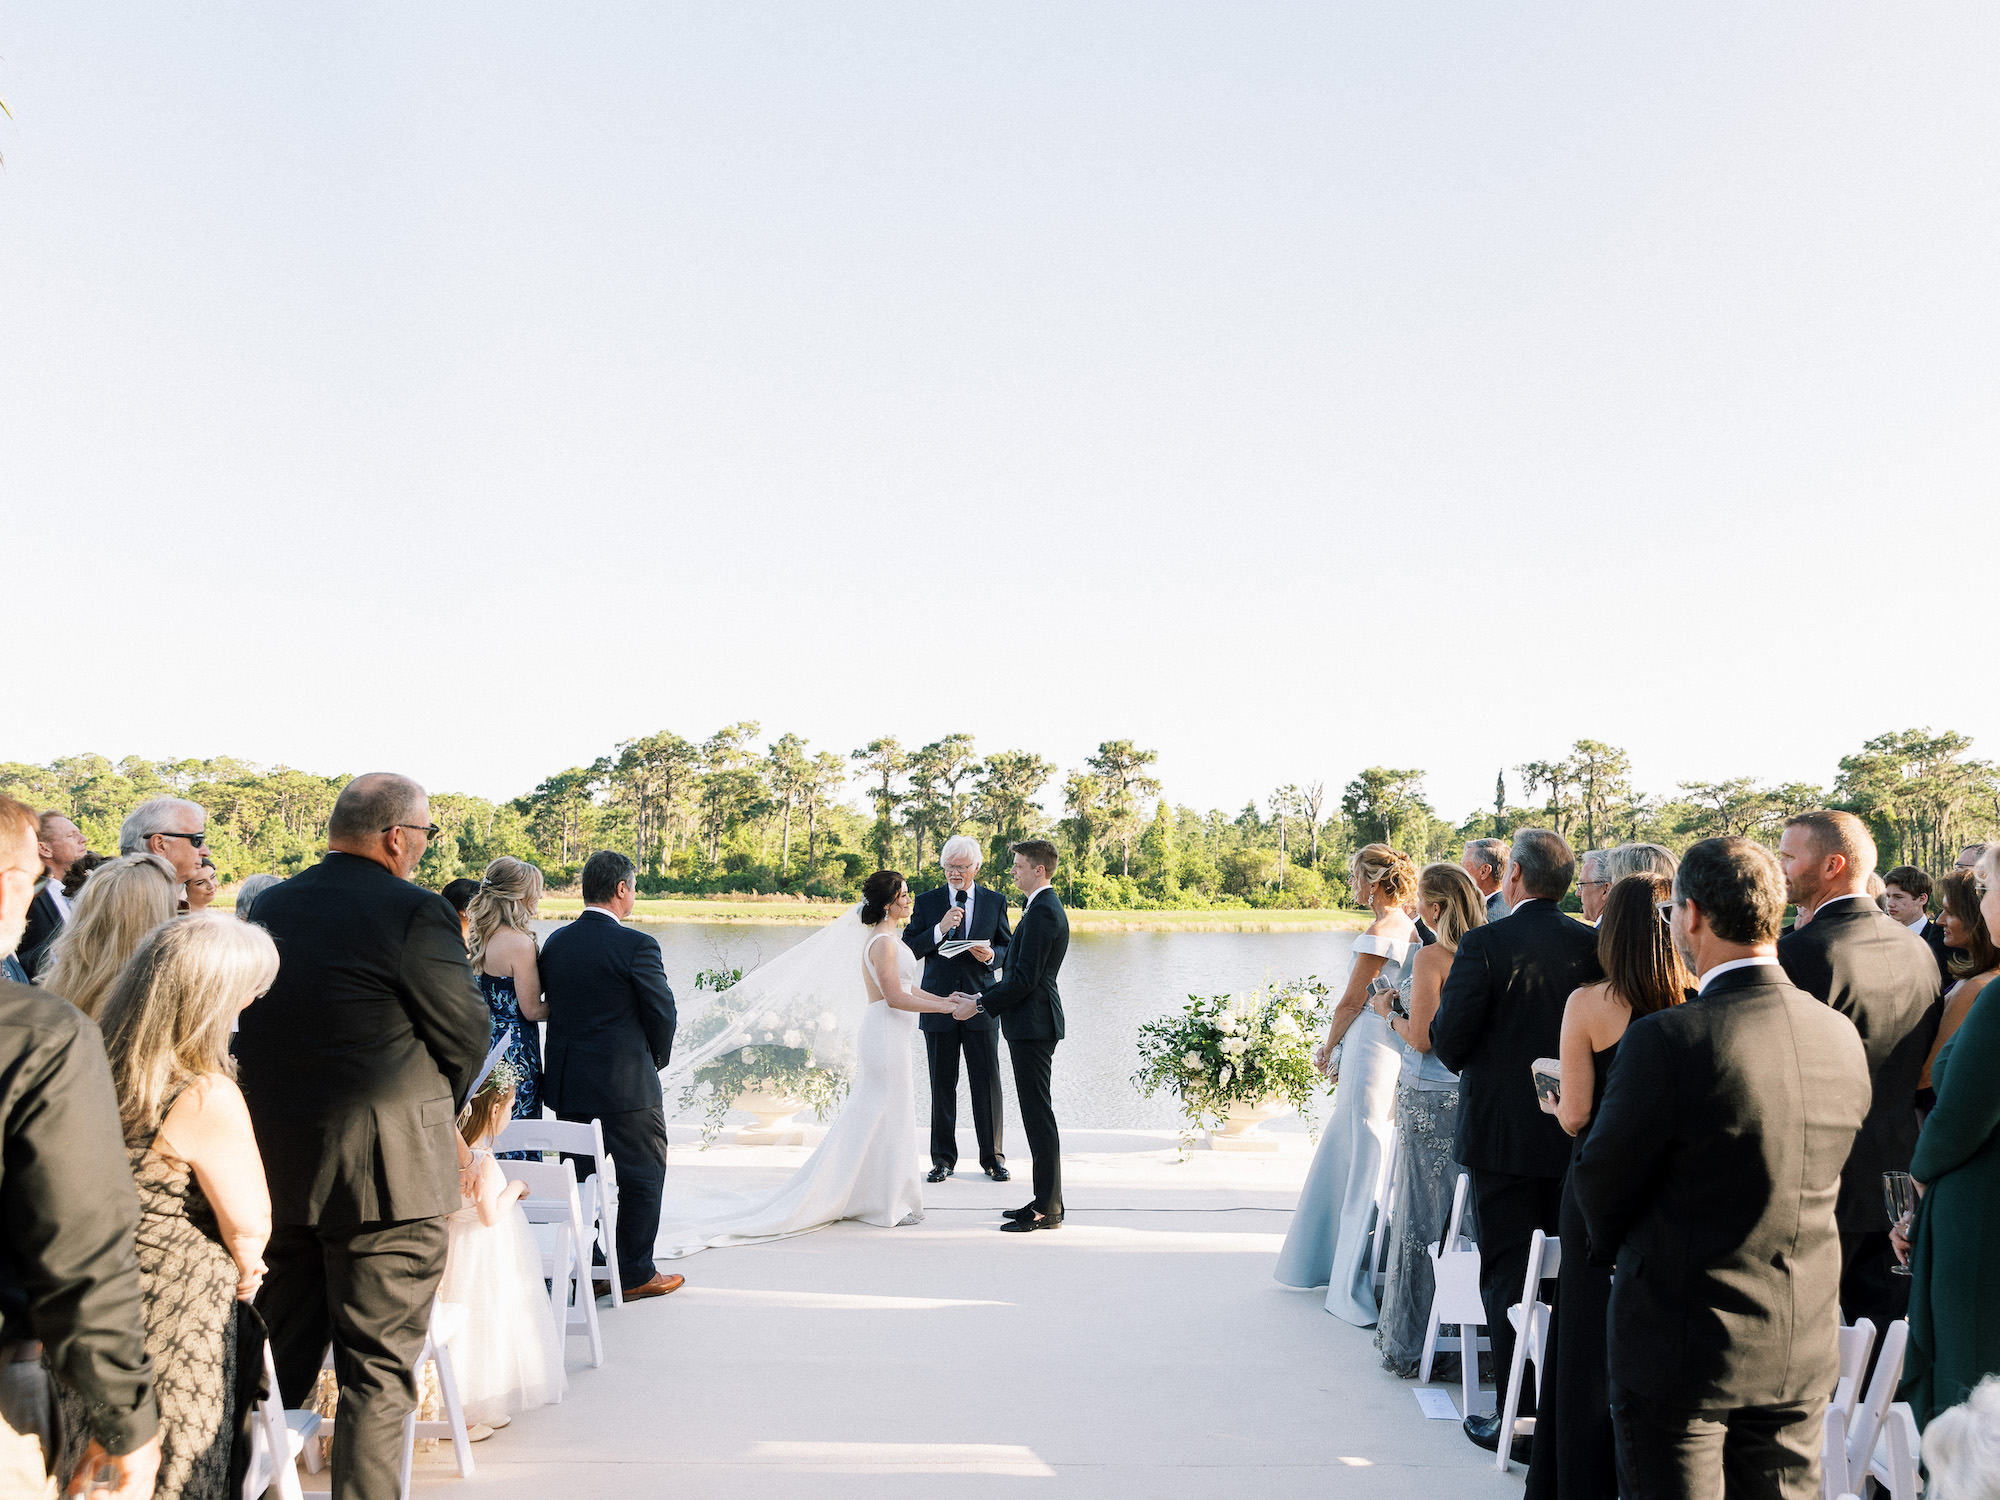 Old Florida Elegant Bride and Groom Exchanging Wedding Vows During Outdoor Wedding Ceremony | Tampa Bay Wedding Venue Concession Golf Club